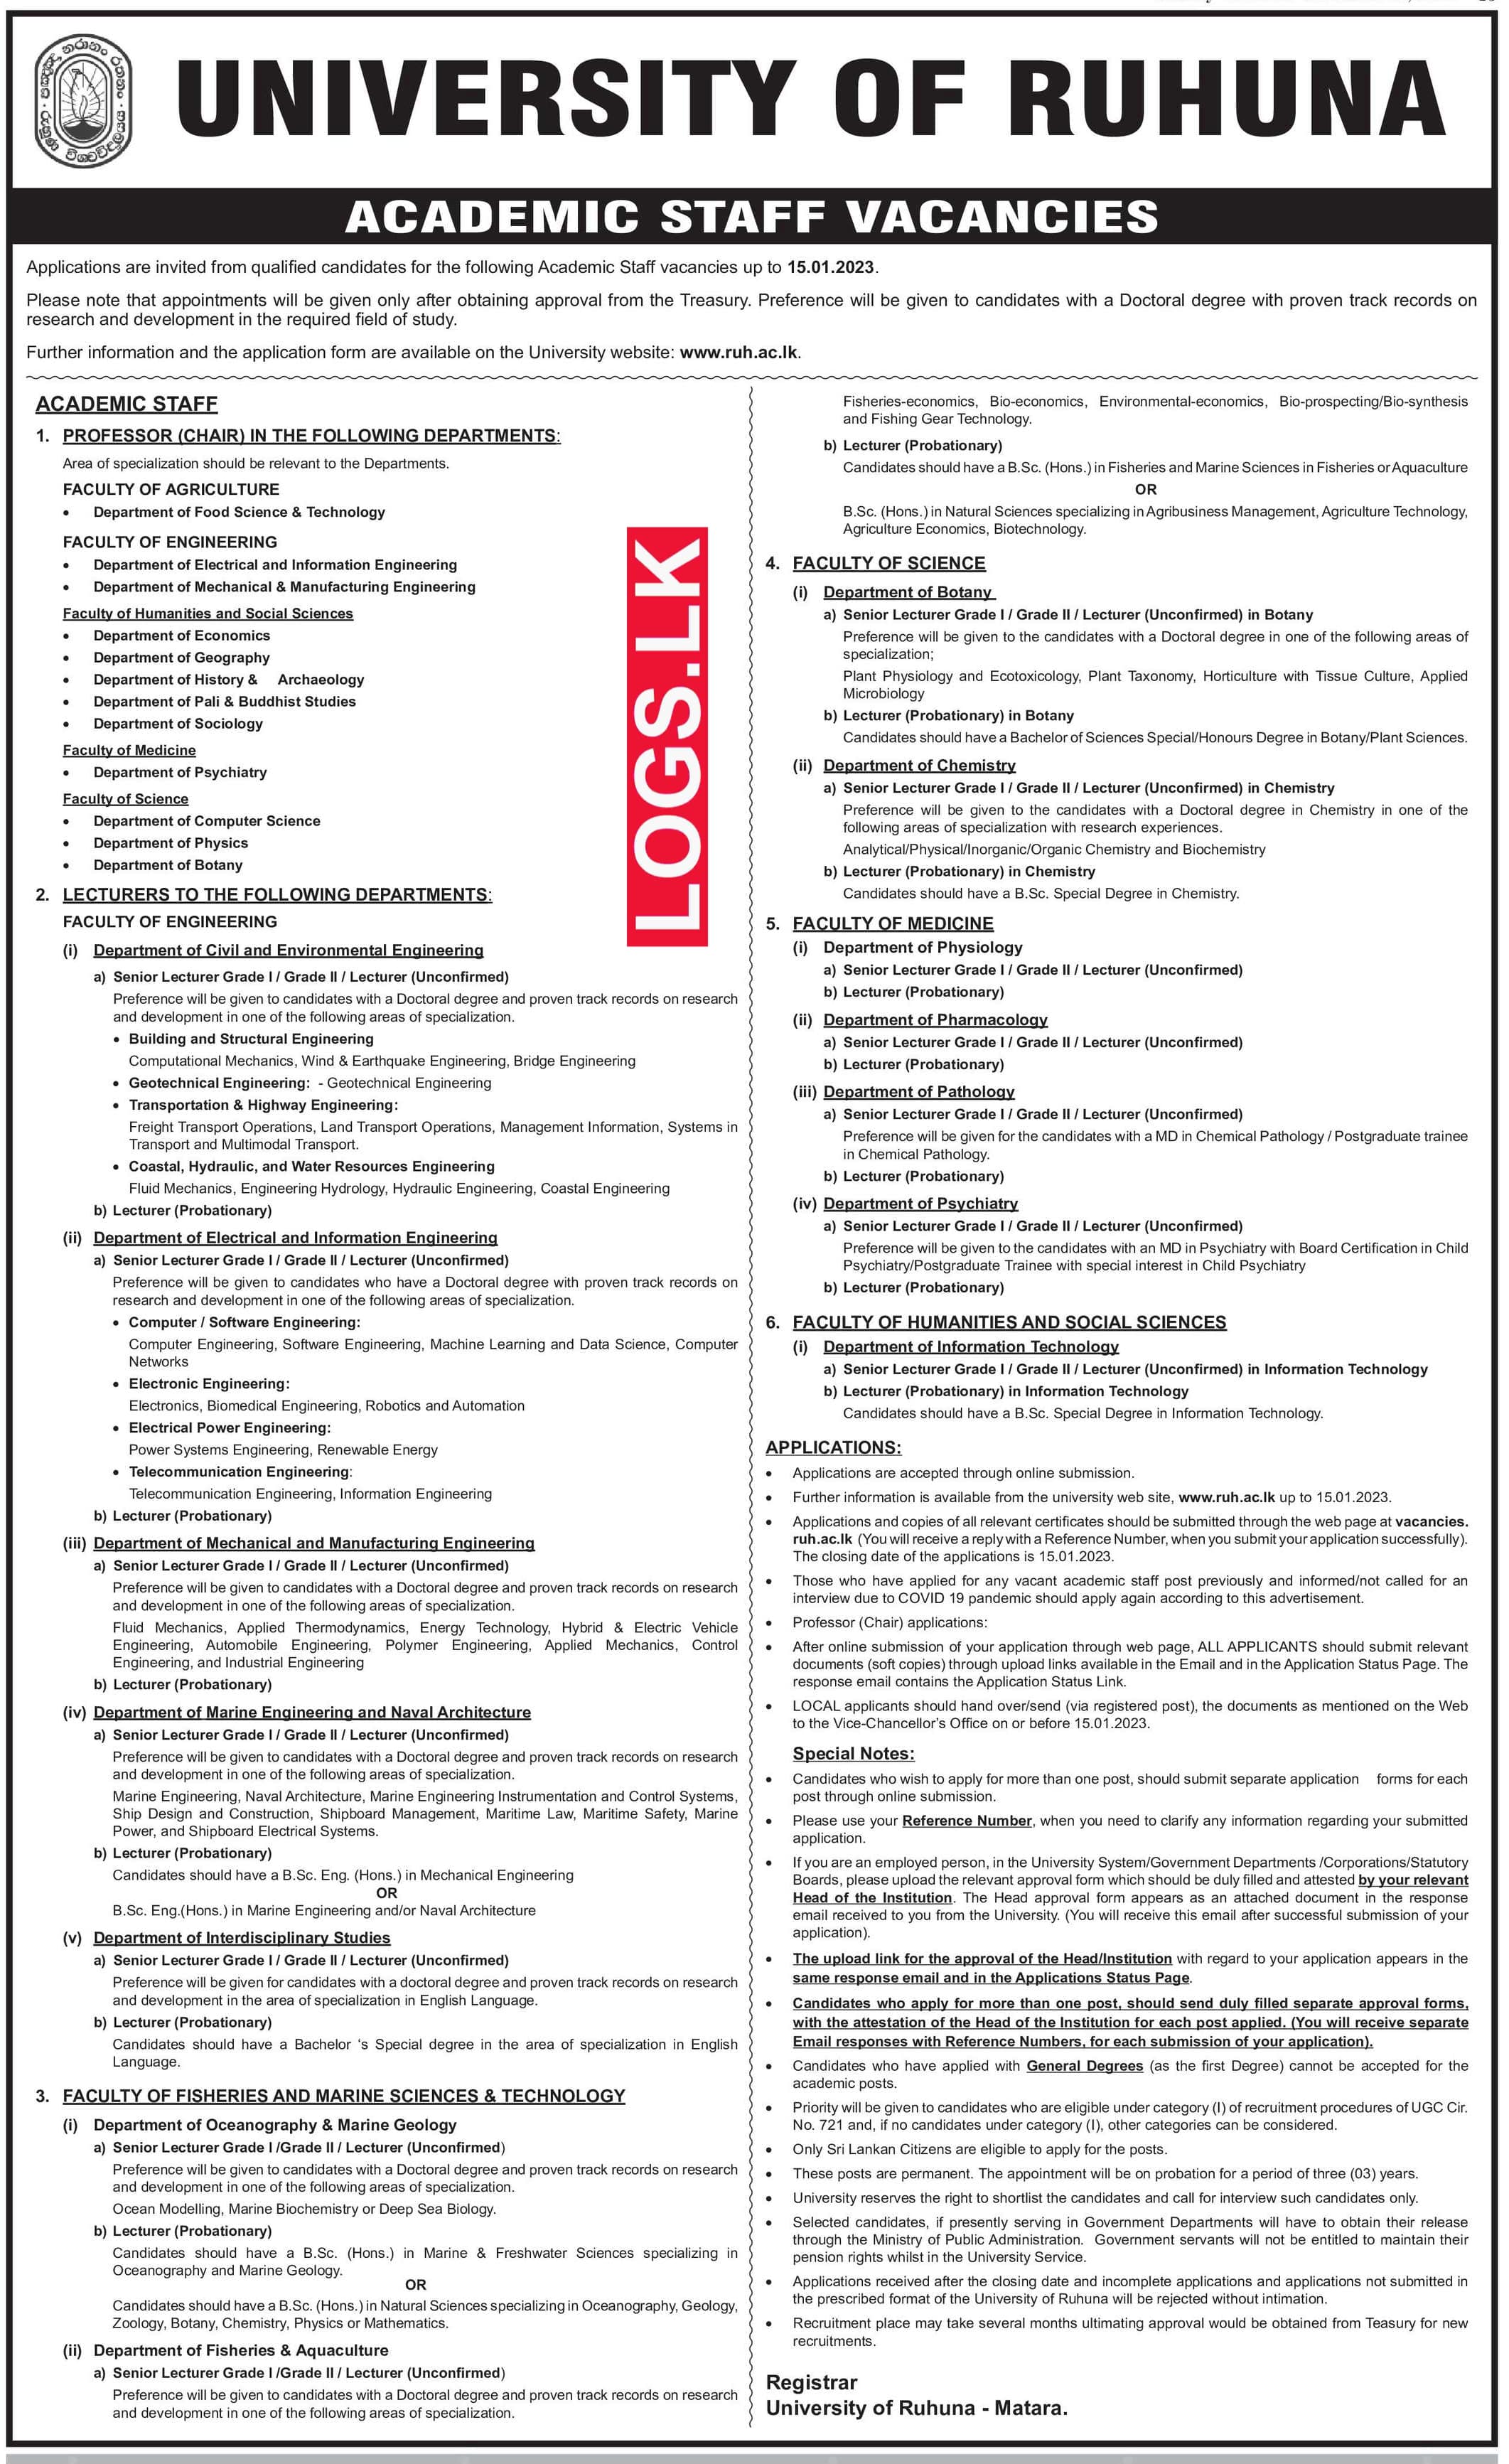 University of Ruhuna Academic Staff Vacancies 2023 Application Form, Details